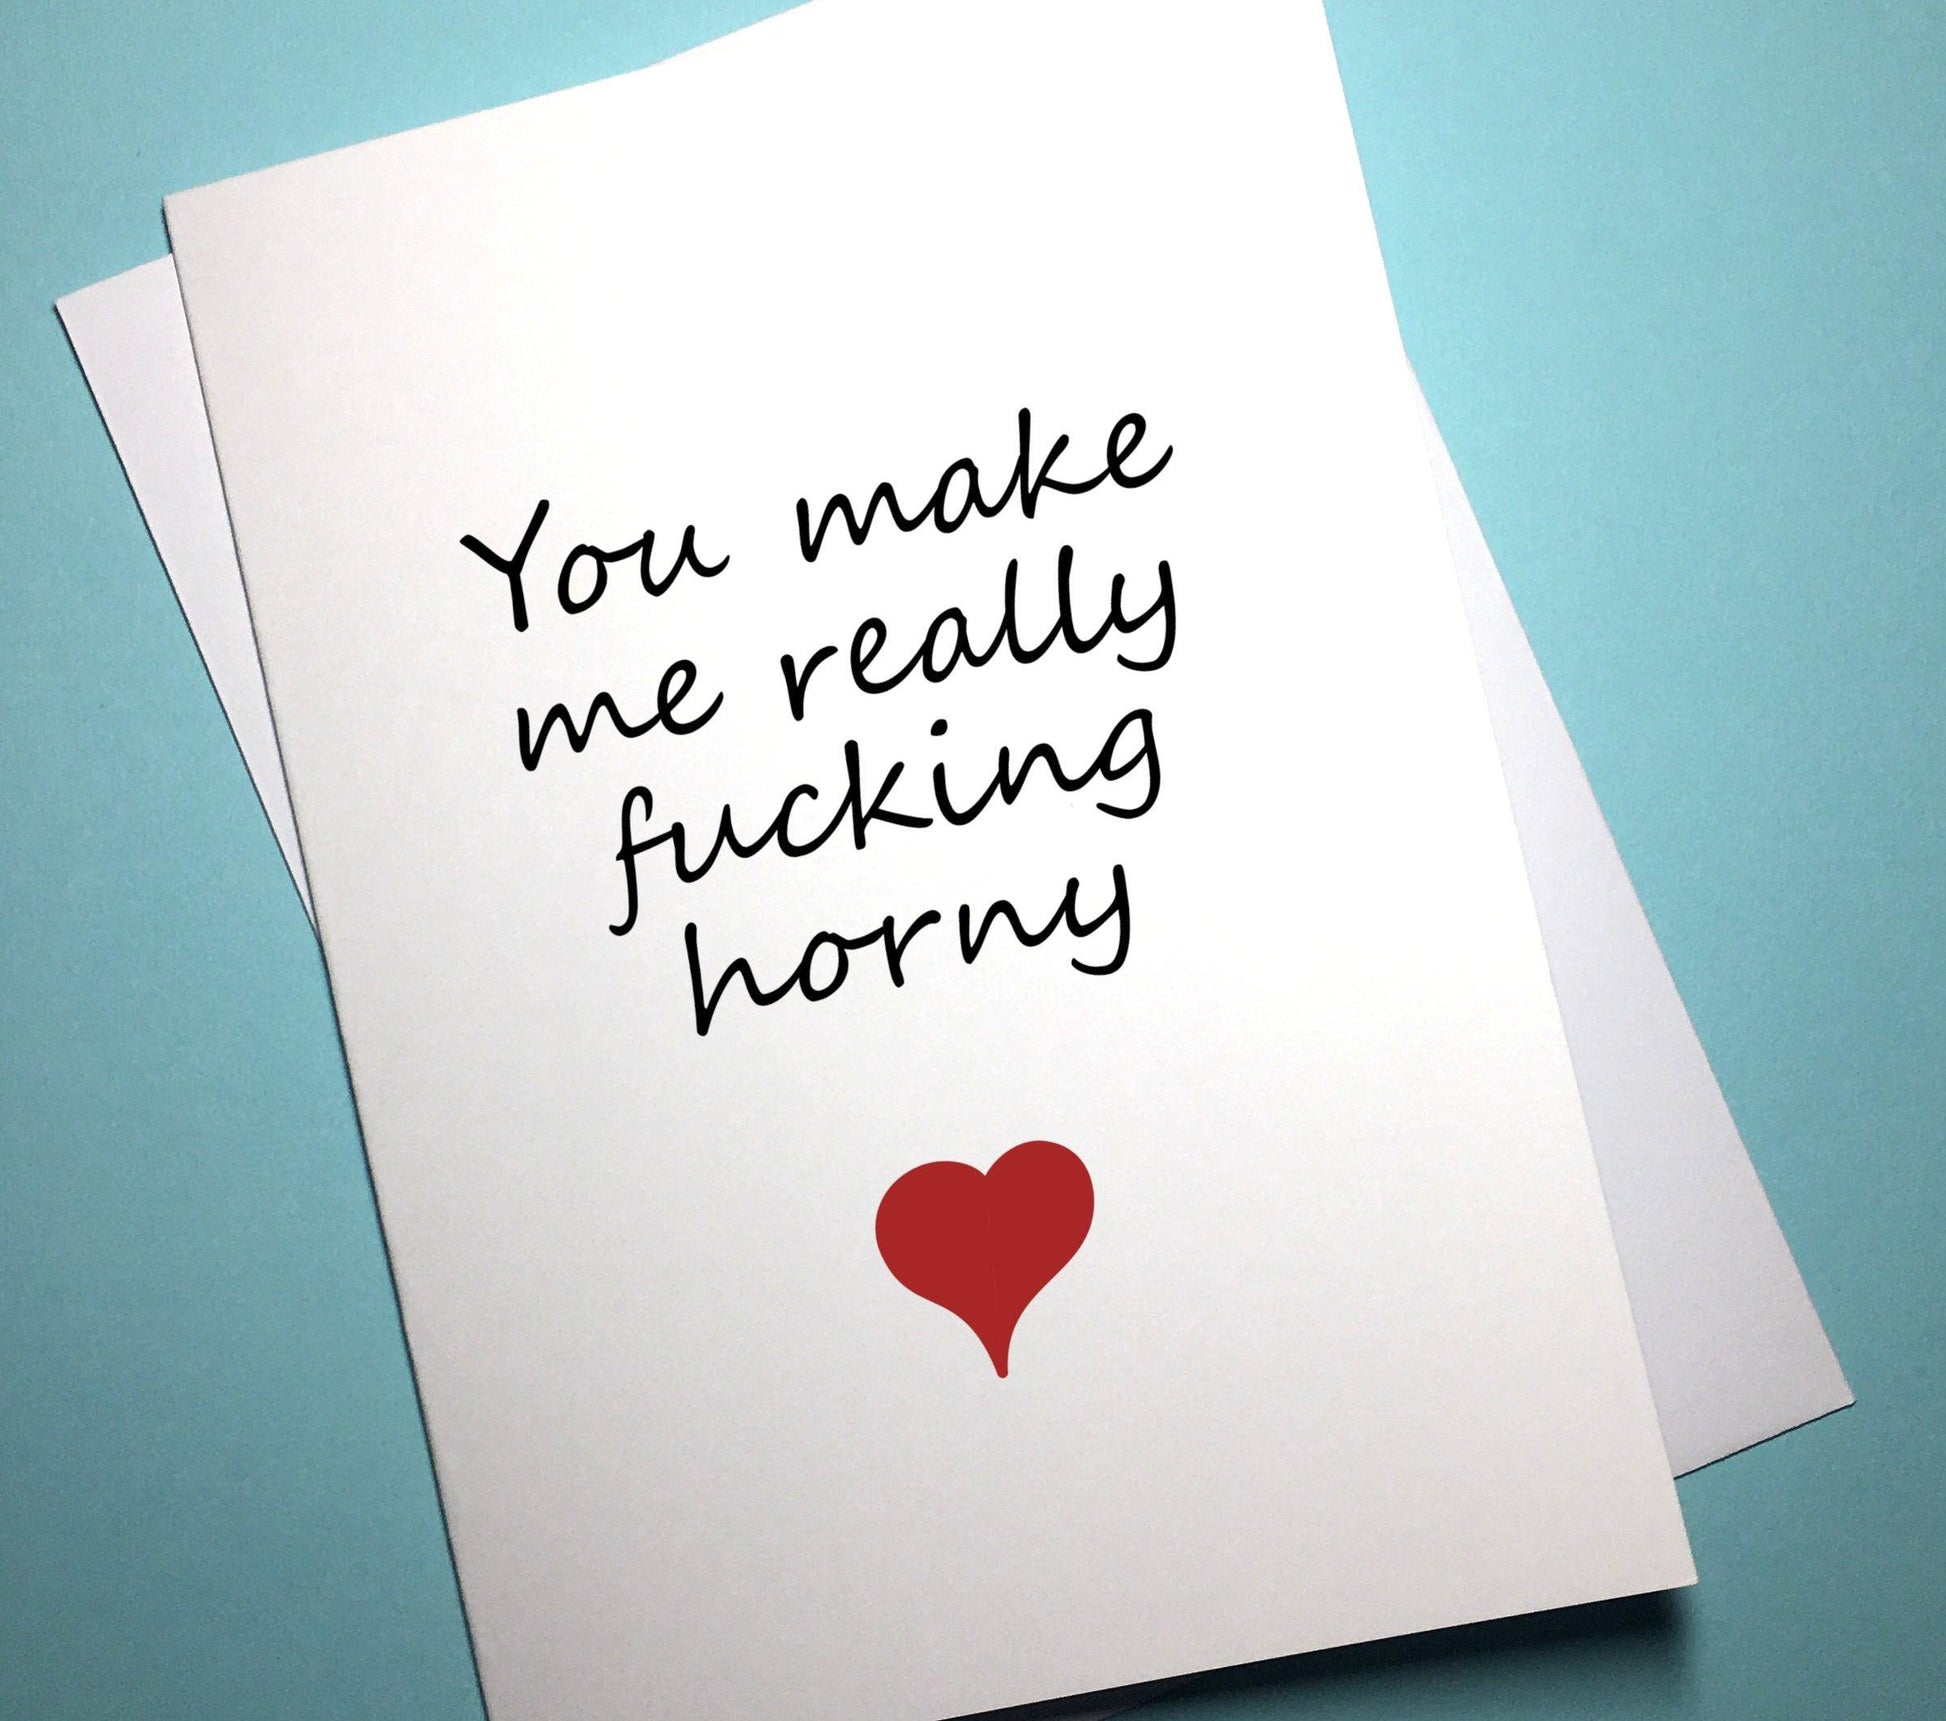 Valentine's Anniversary Card - Horny - Mr. Inappropriate 